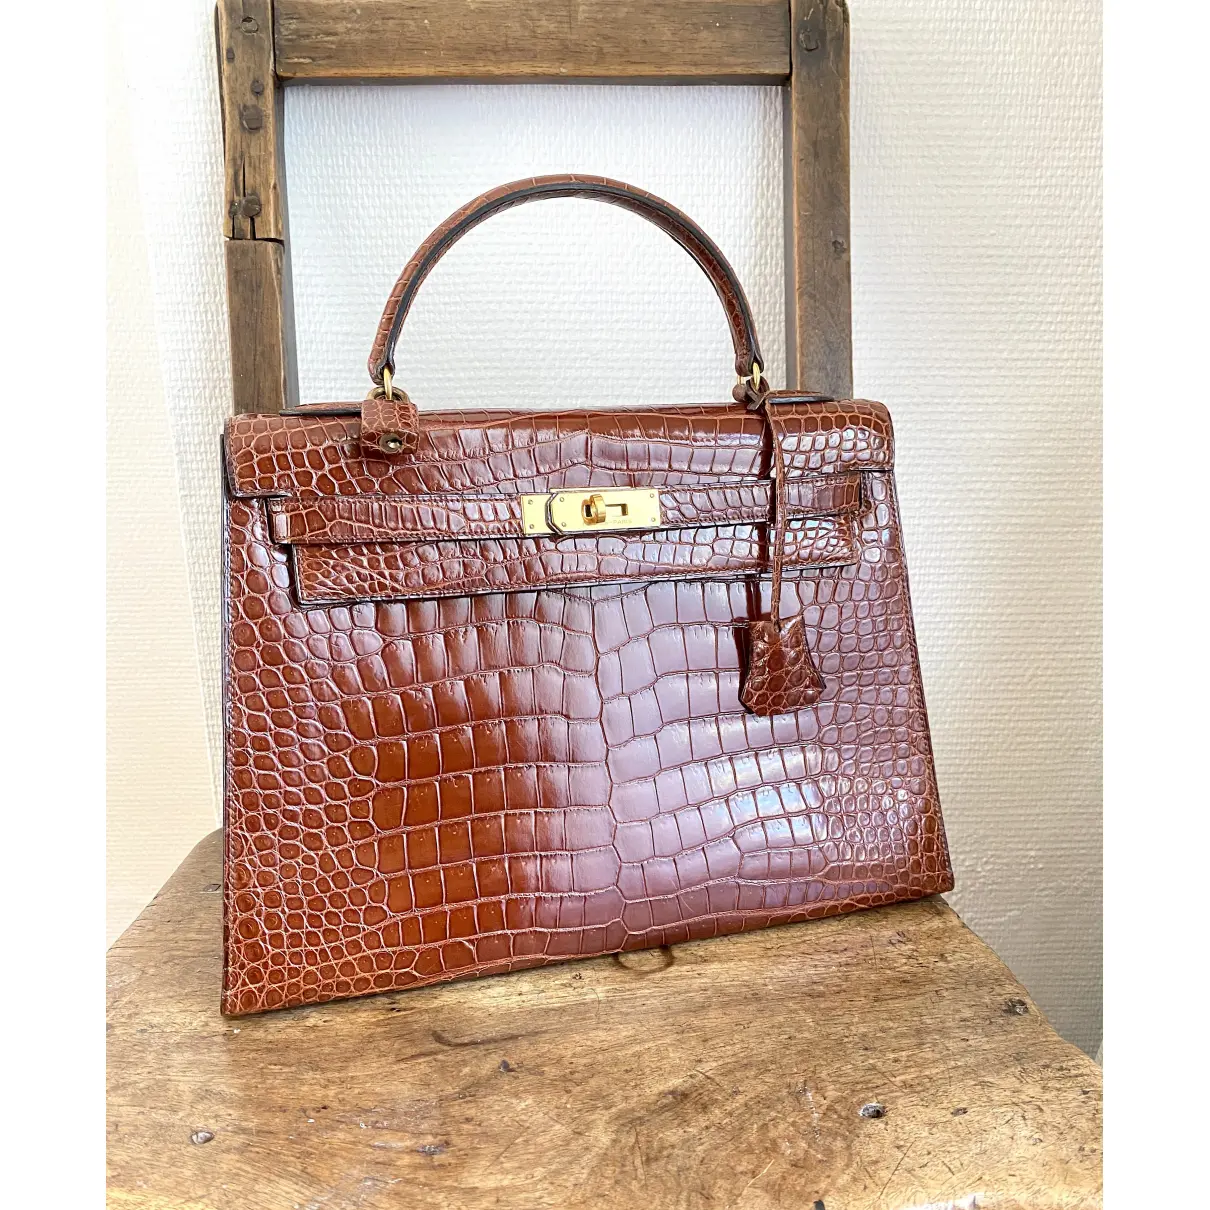 Buy Hermès Kelly 32 crocodile handbag online